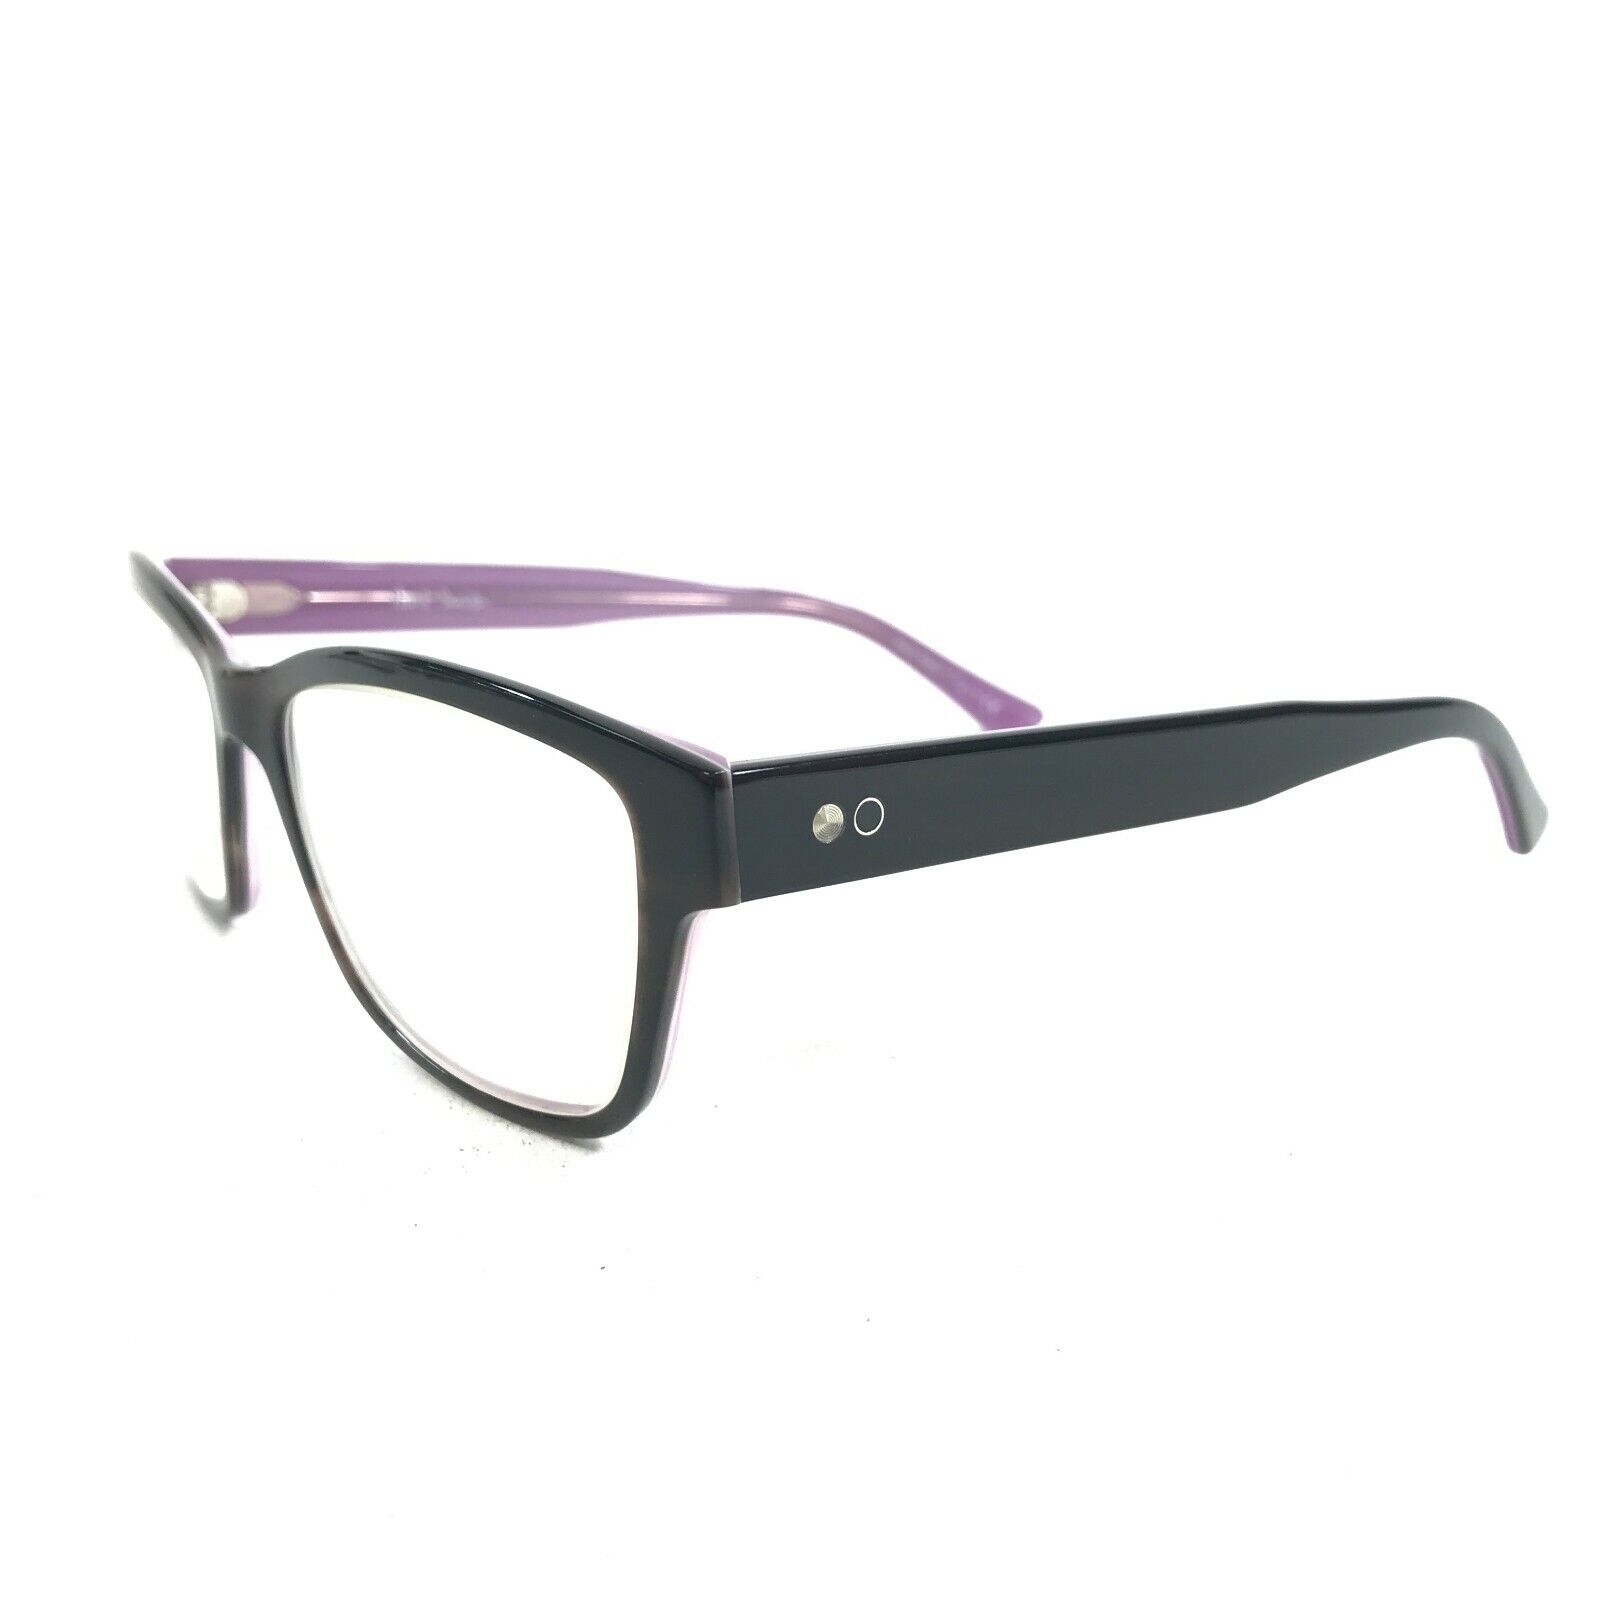 Paul Smith PM 8120 1089 ARIELLE Eyeglasses Frames Brown Purple S